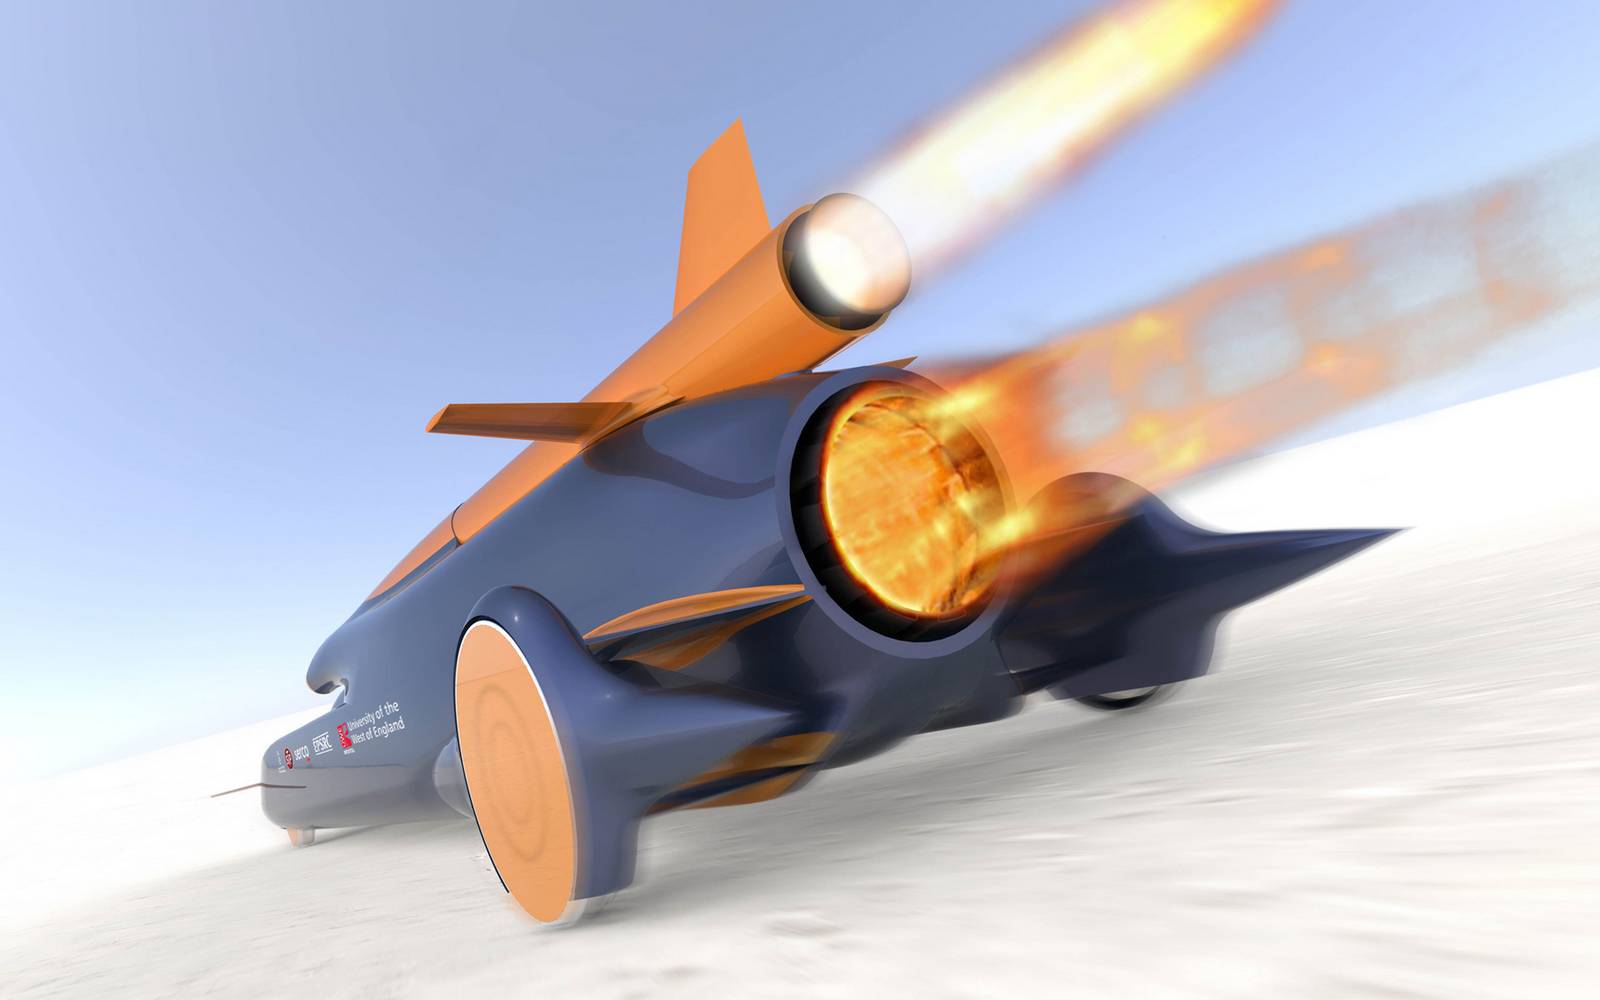 bloodhound-ssc-1000-mph-rocket-auto-prototype